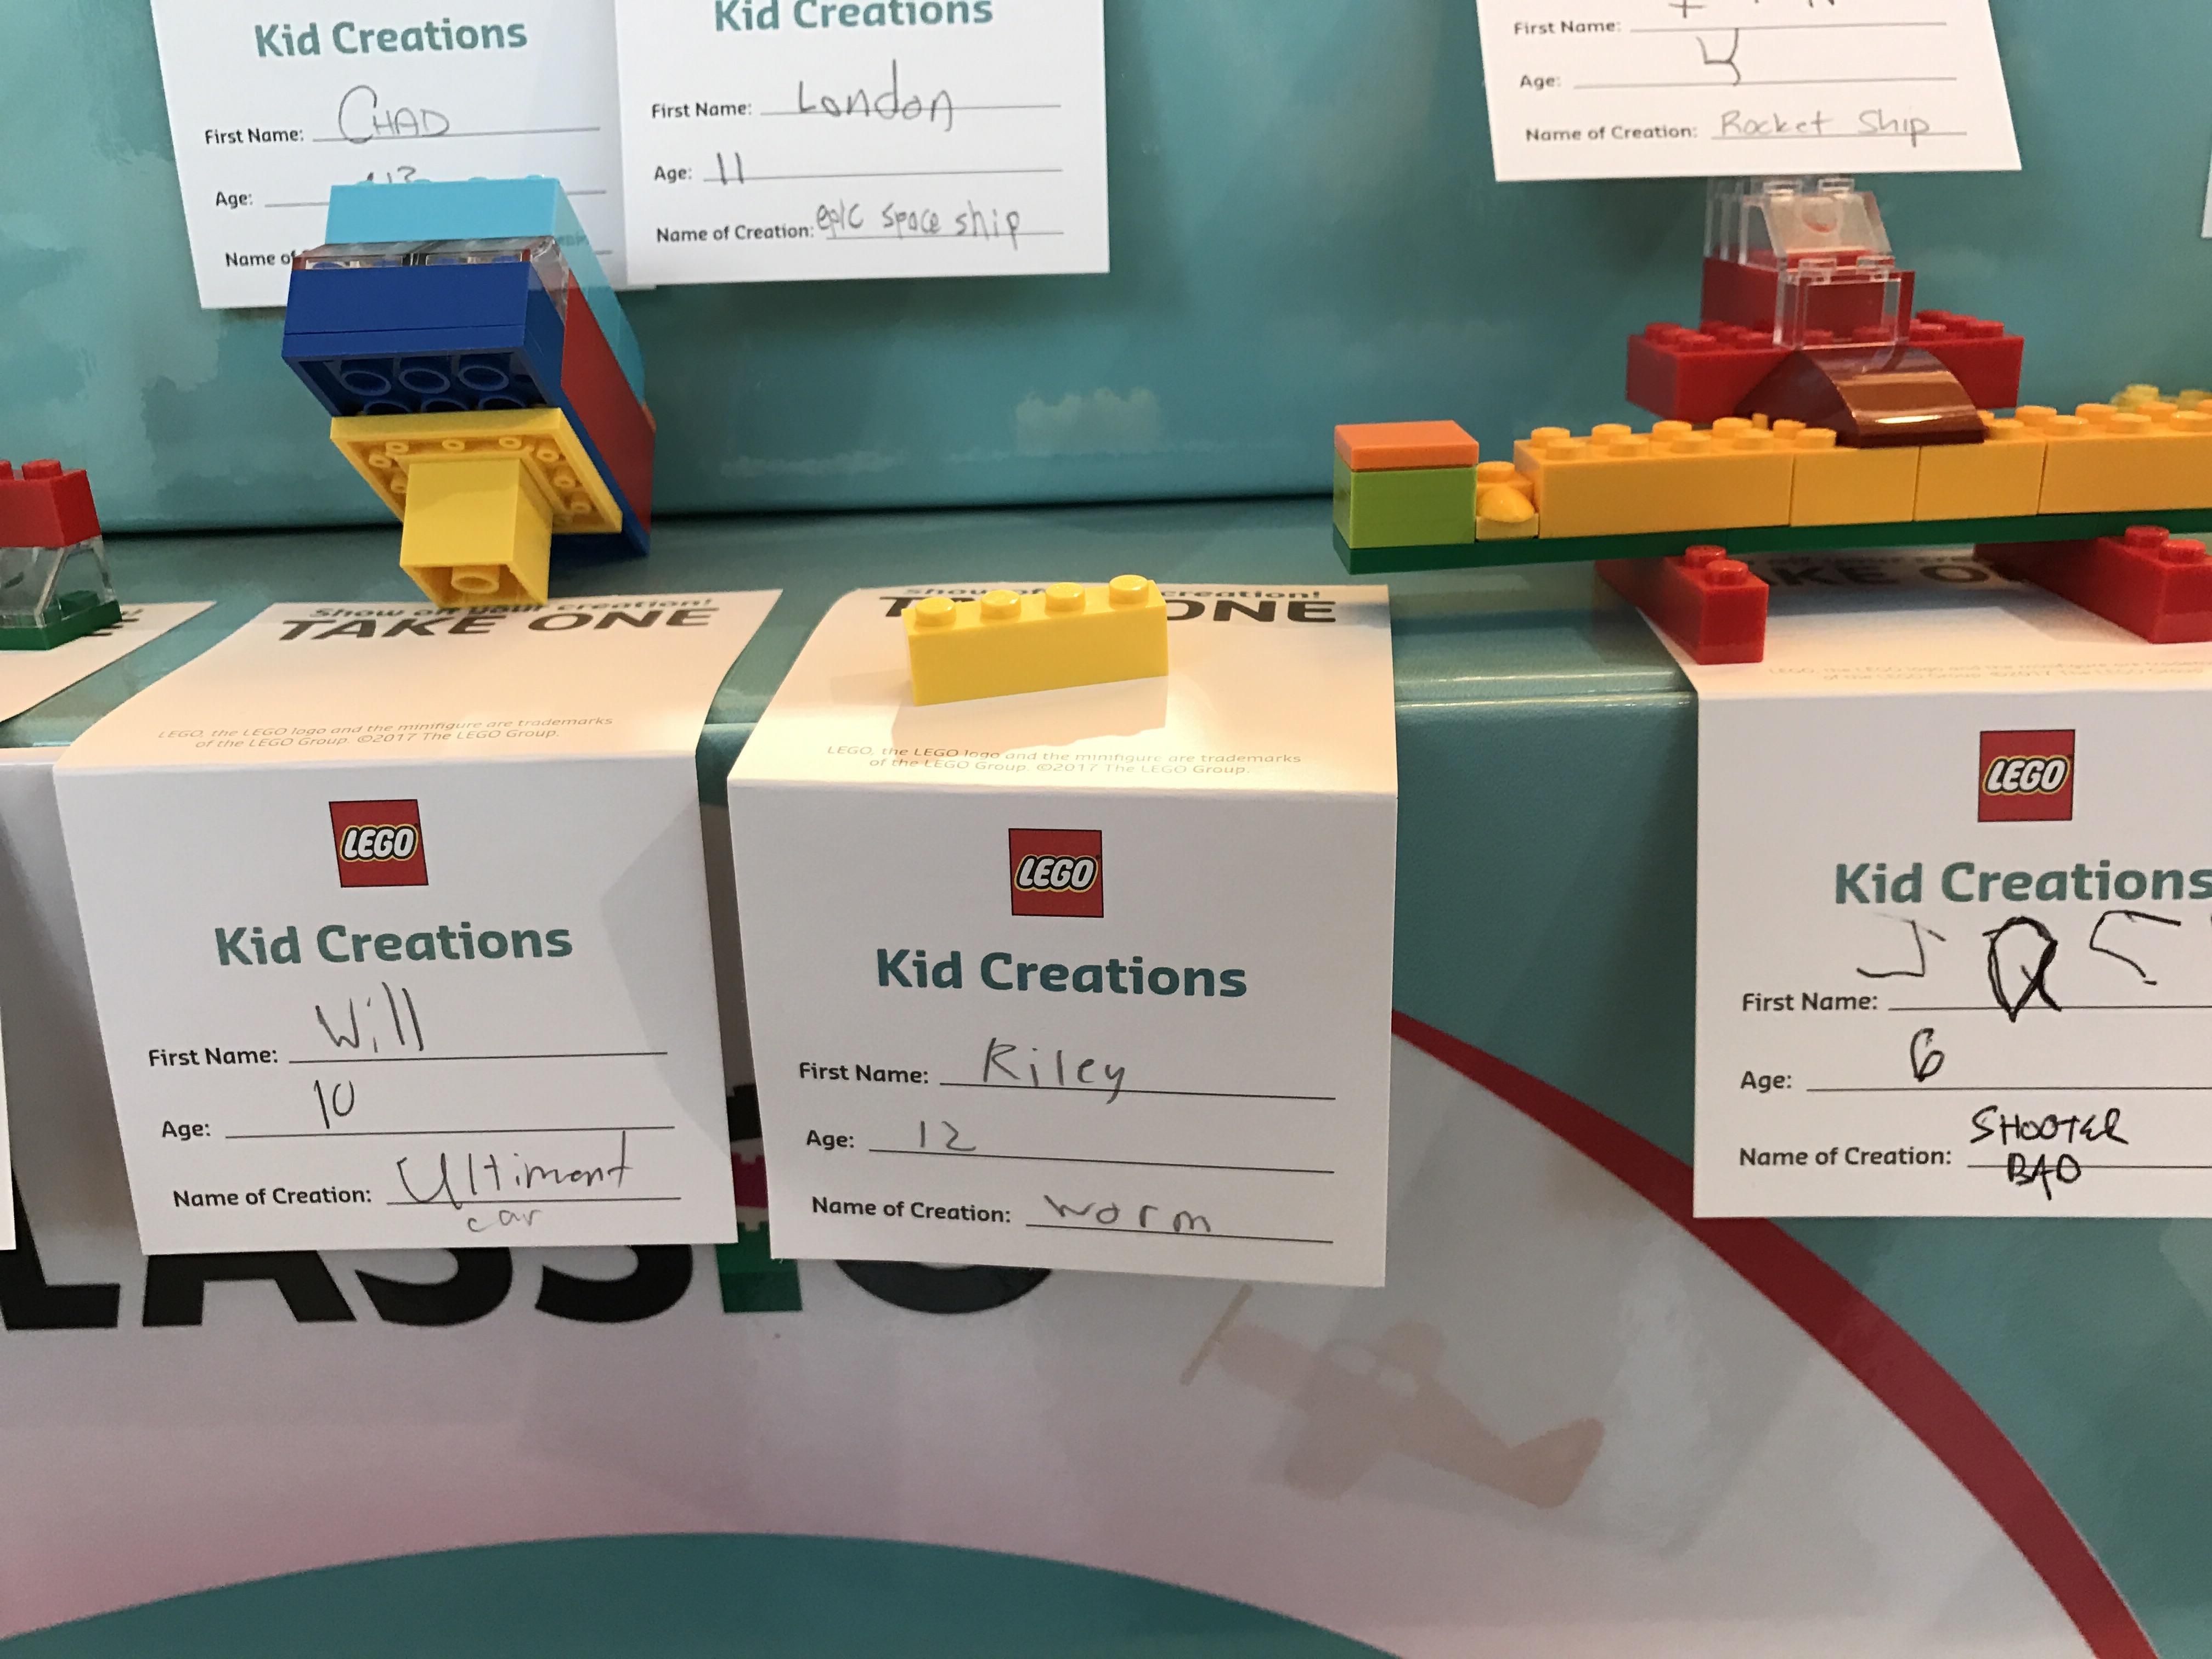 This kid's minimalistic Lego creation.